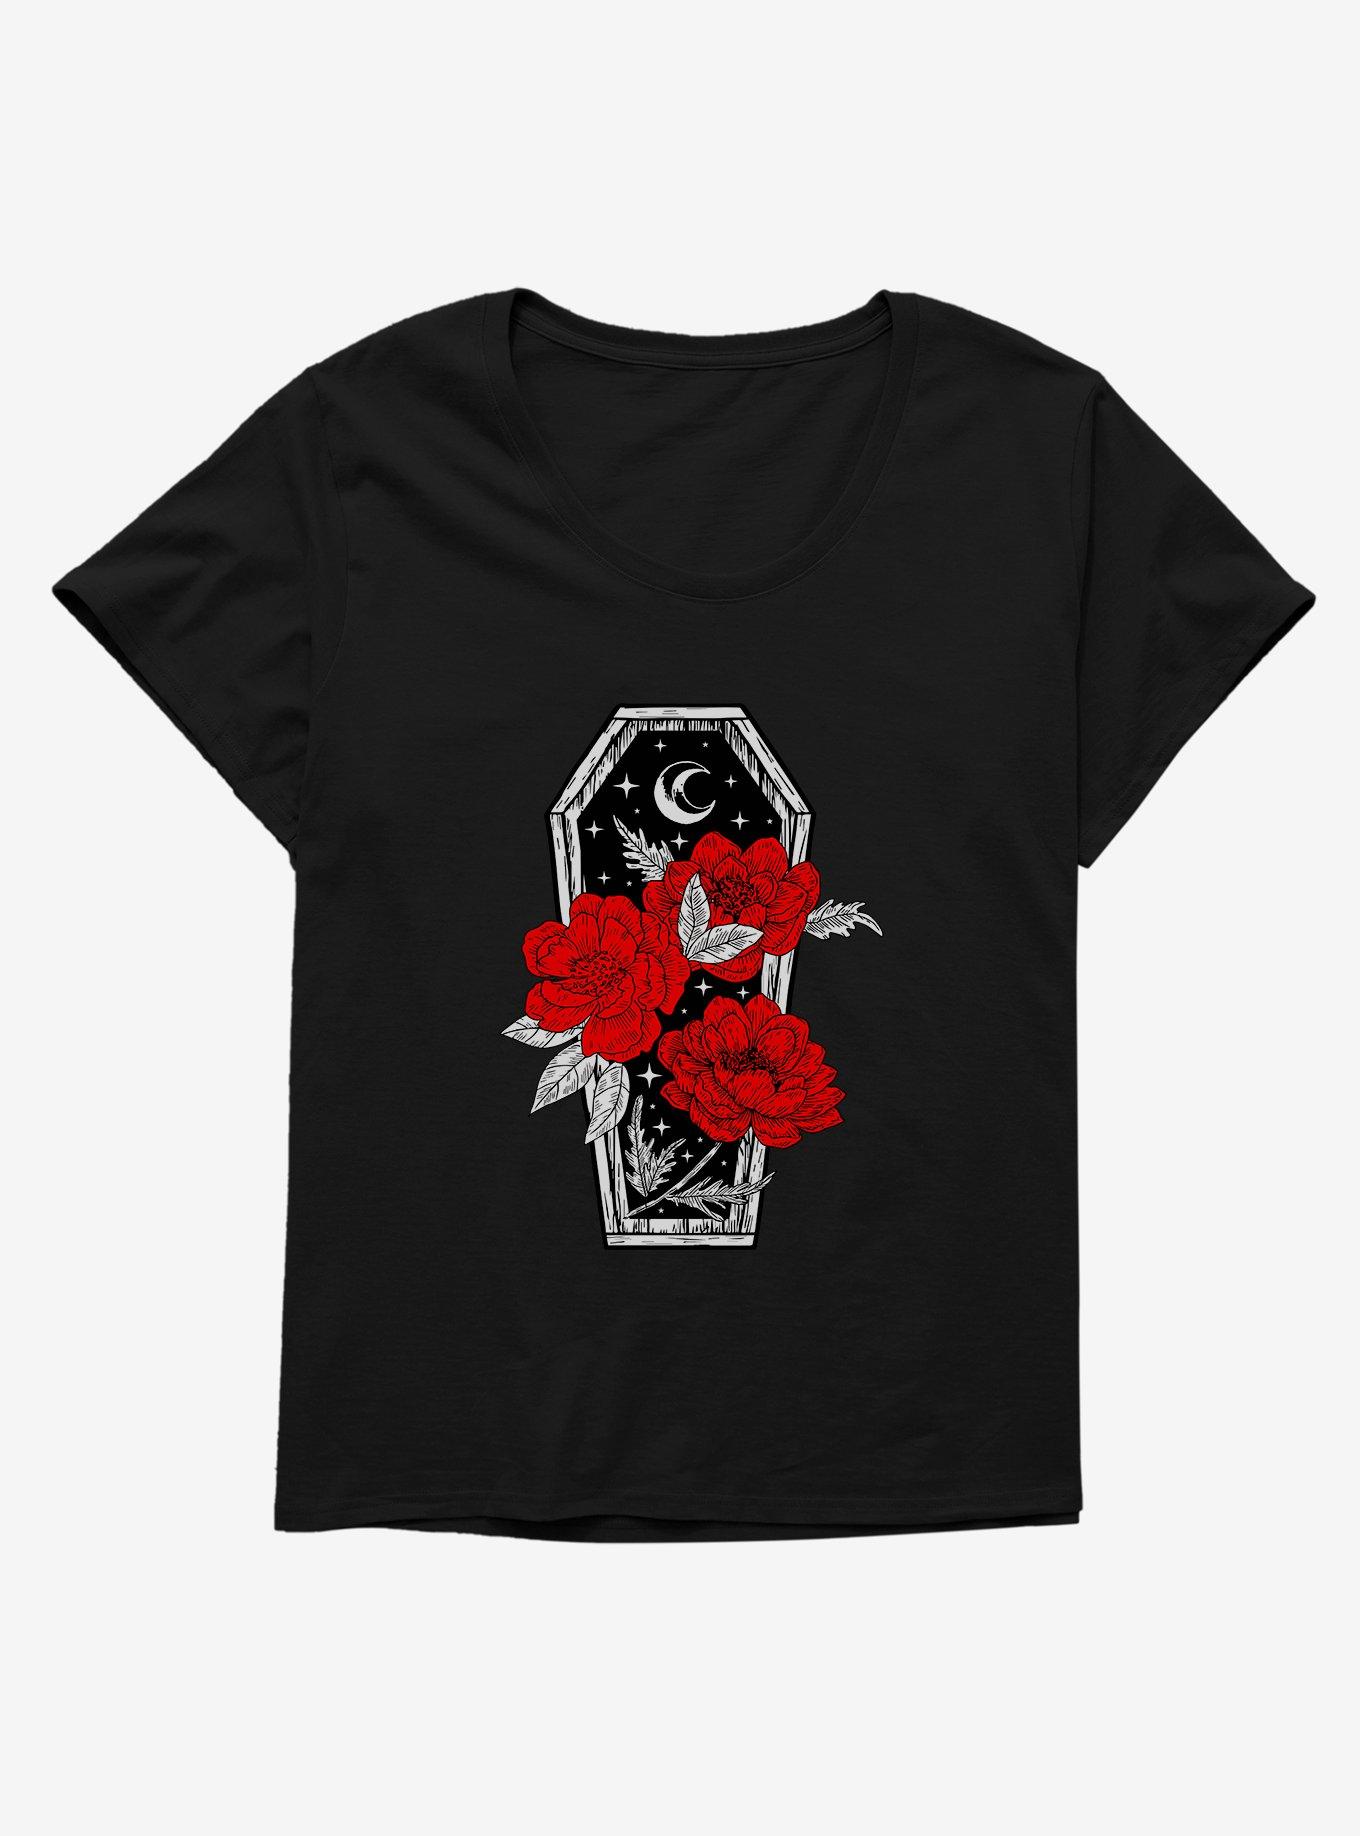 Celestial Floral Coffin Girls T-Shirt Plus